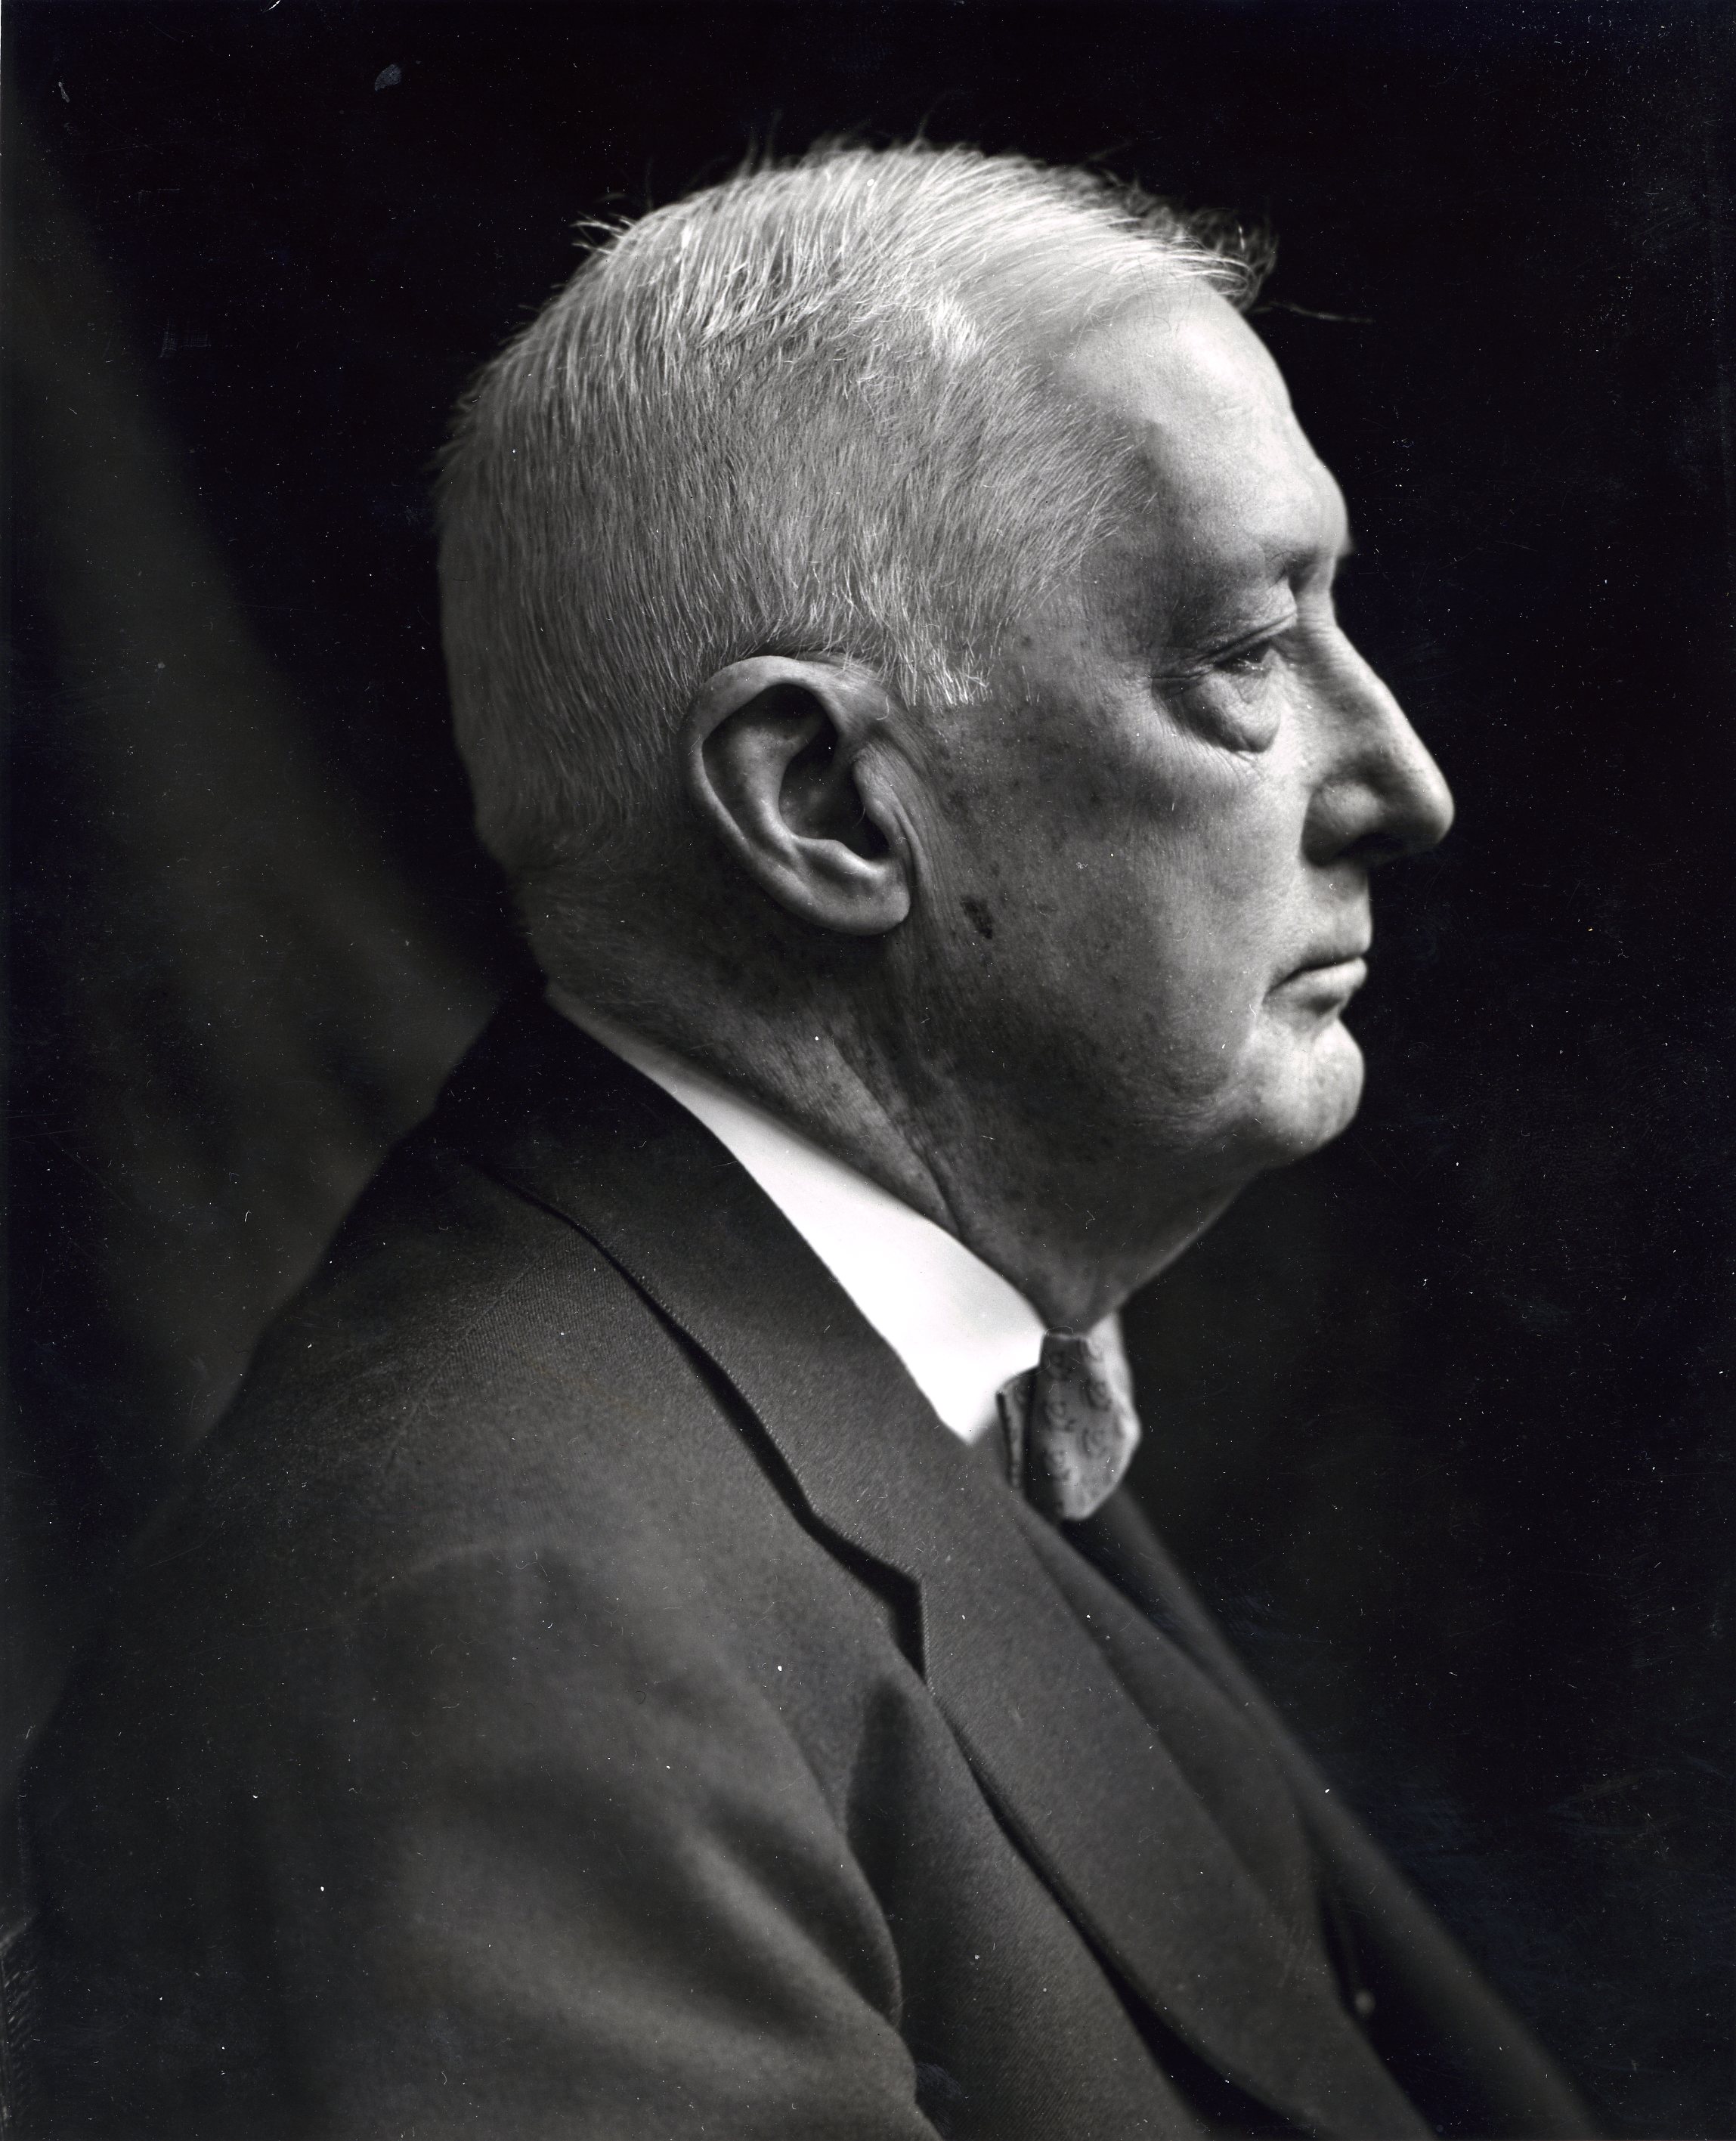 Member portrait of Henry deForest Baldwin